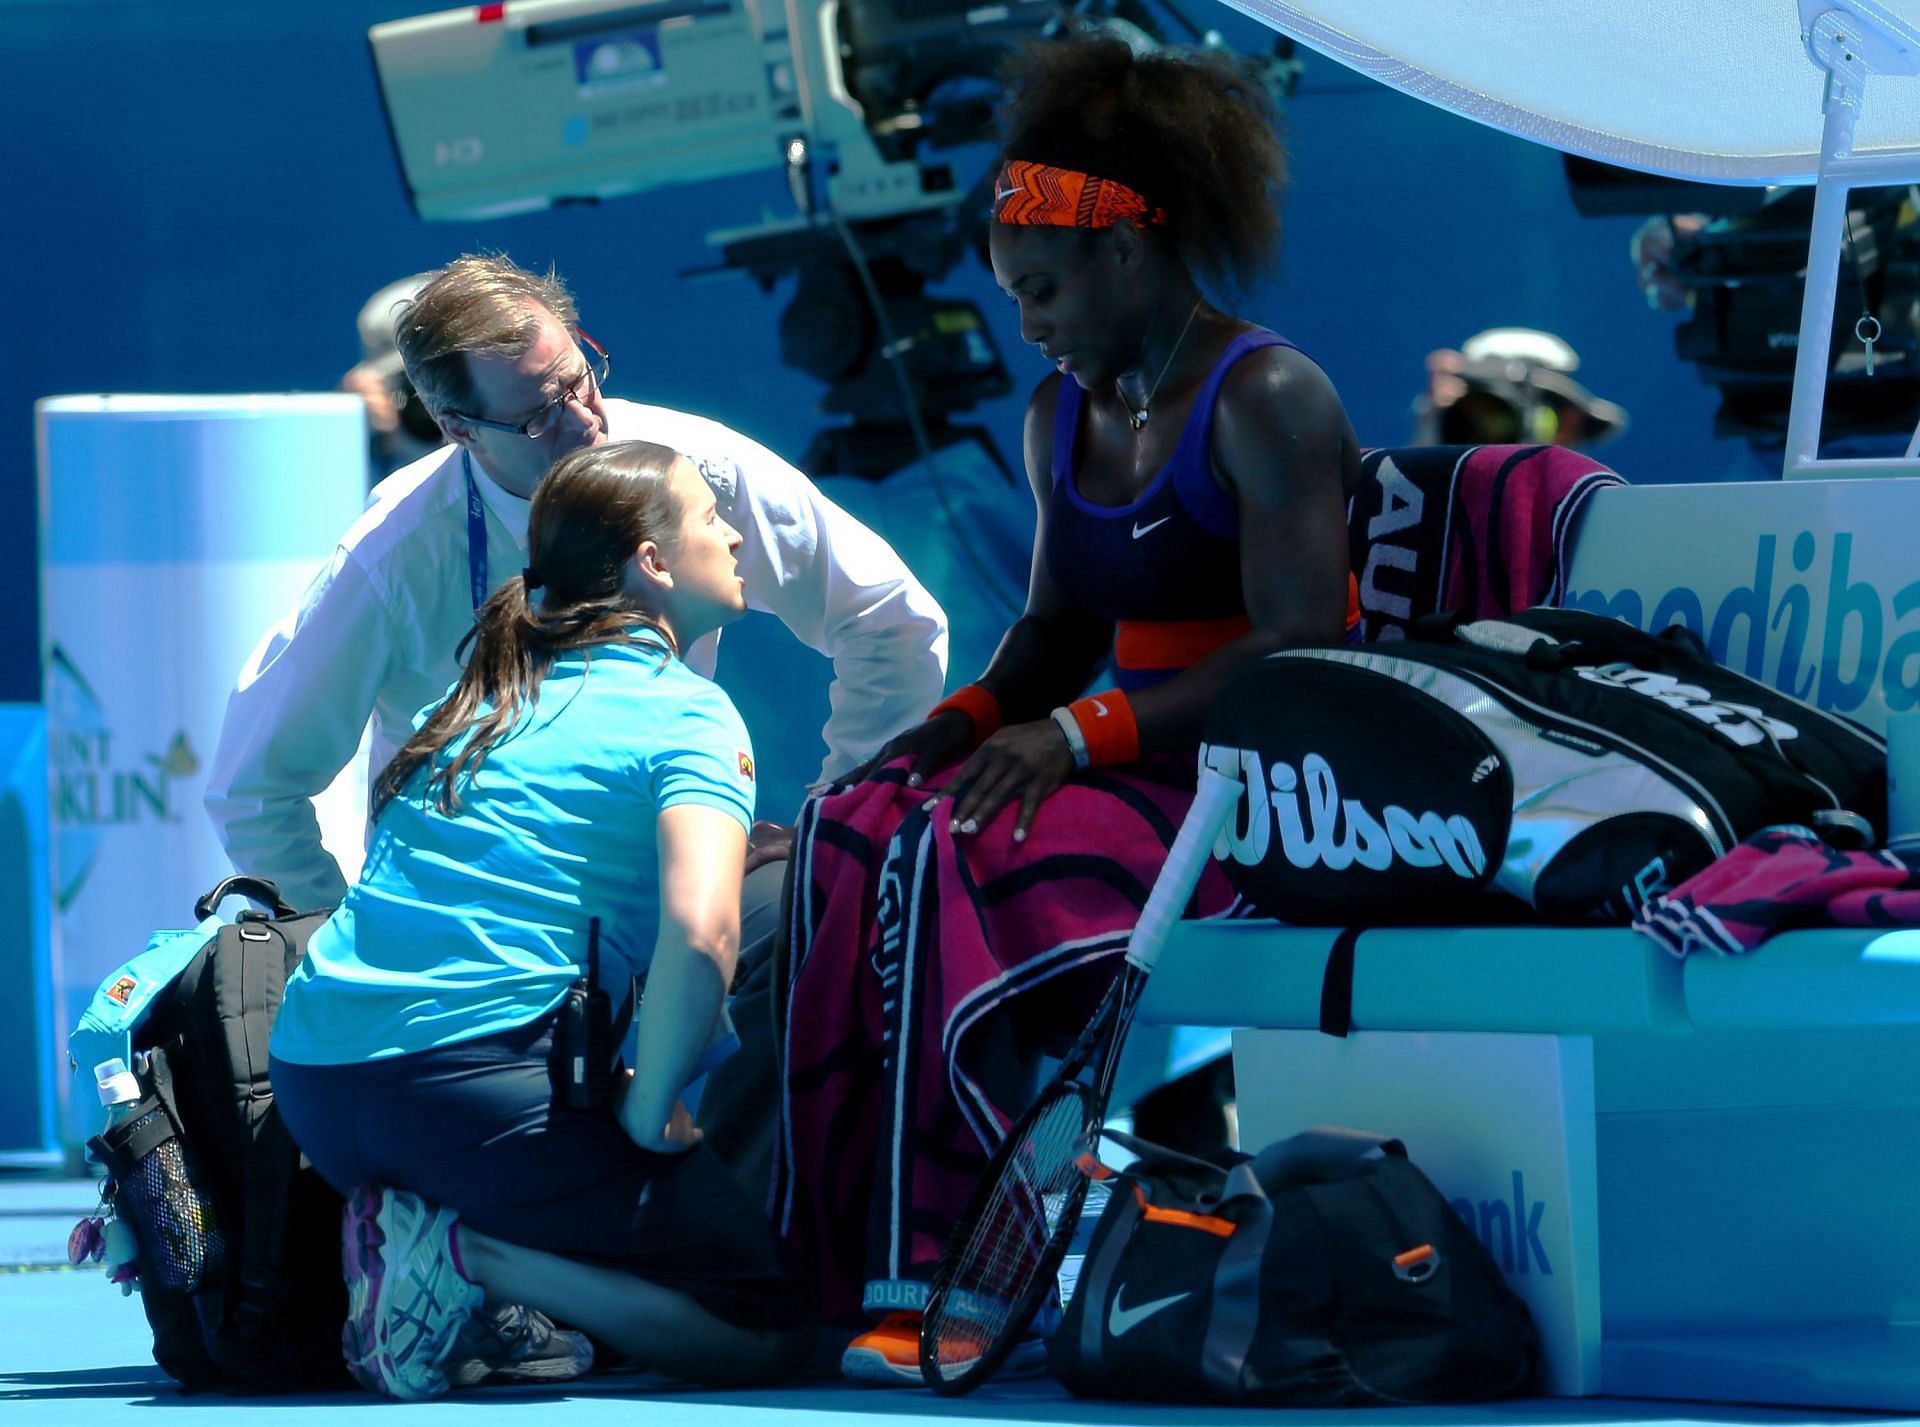 Serena Williams taking an injury break at the Australian Open